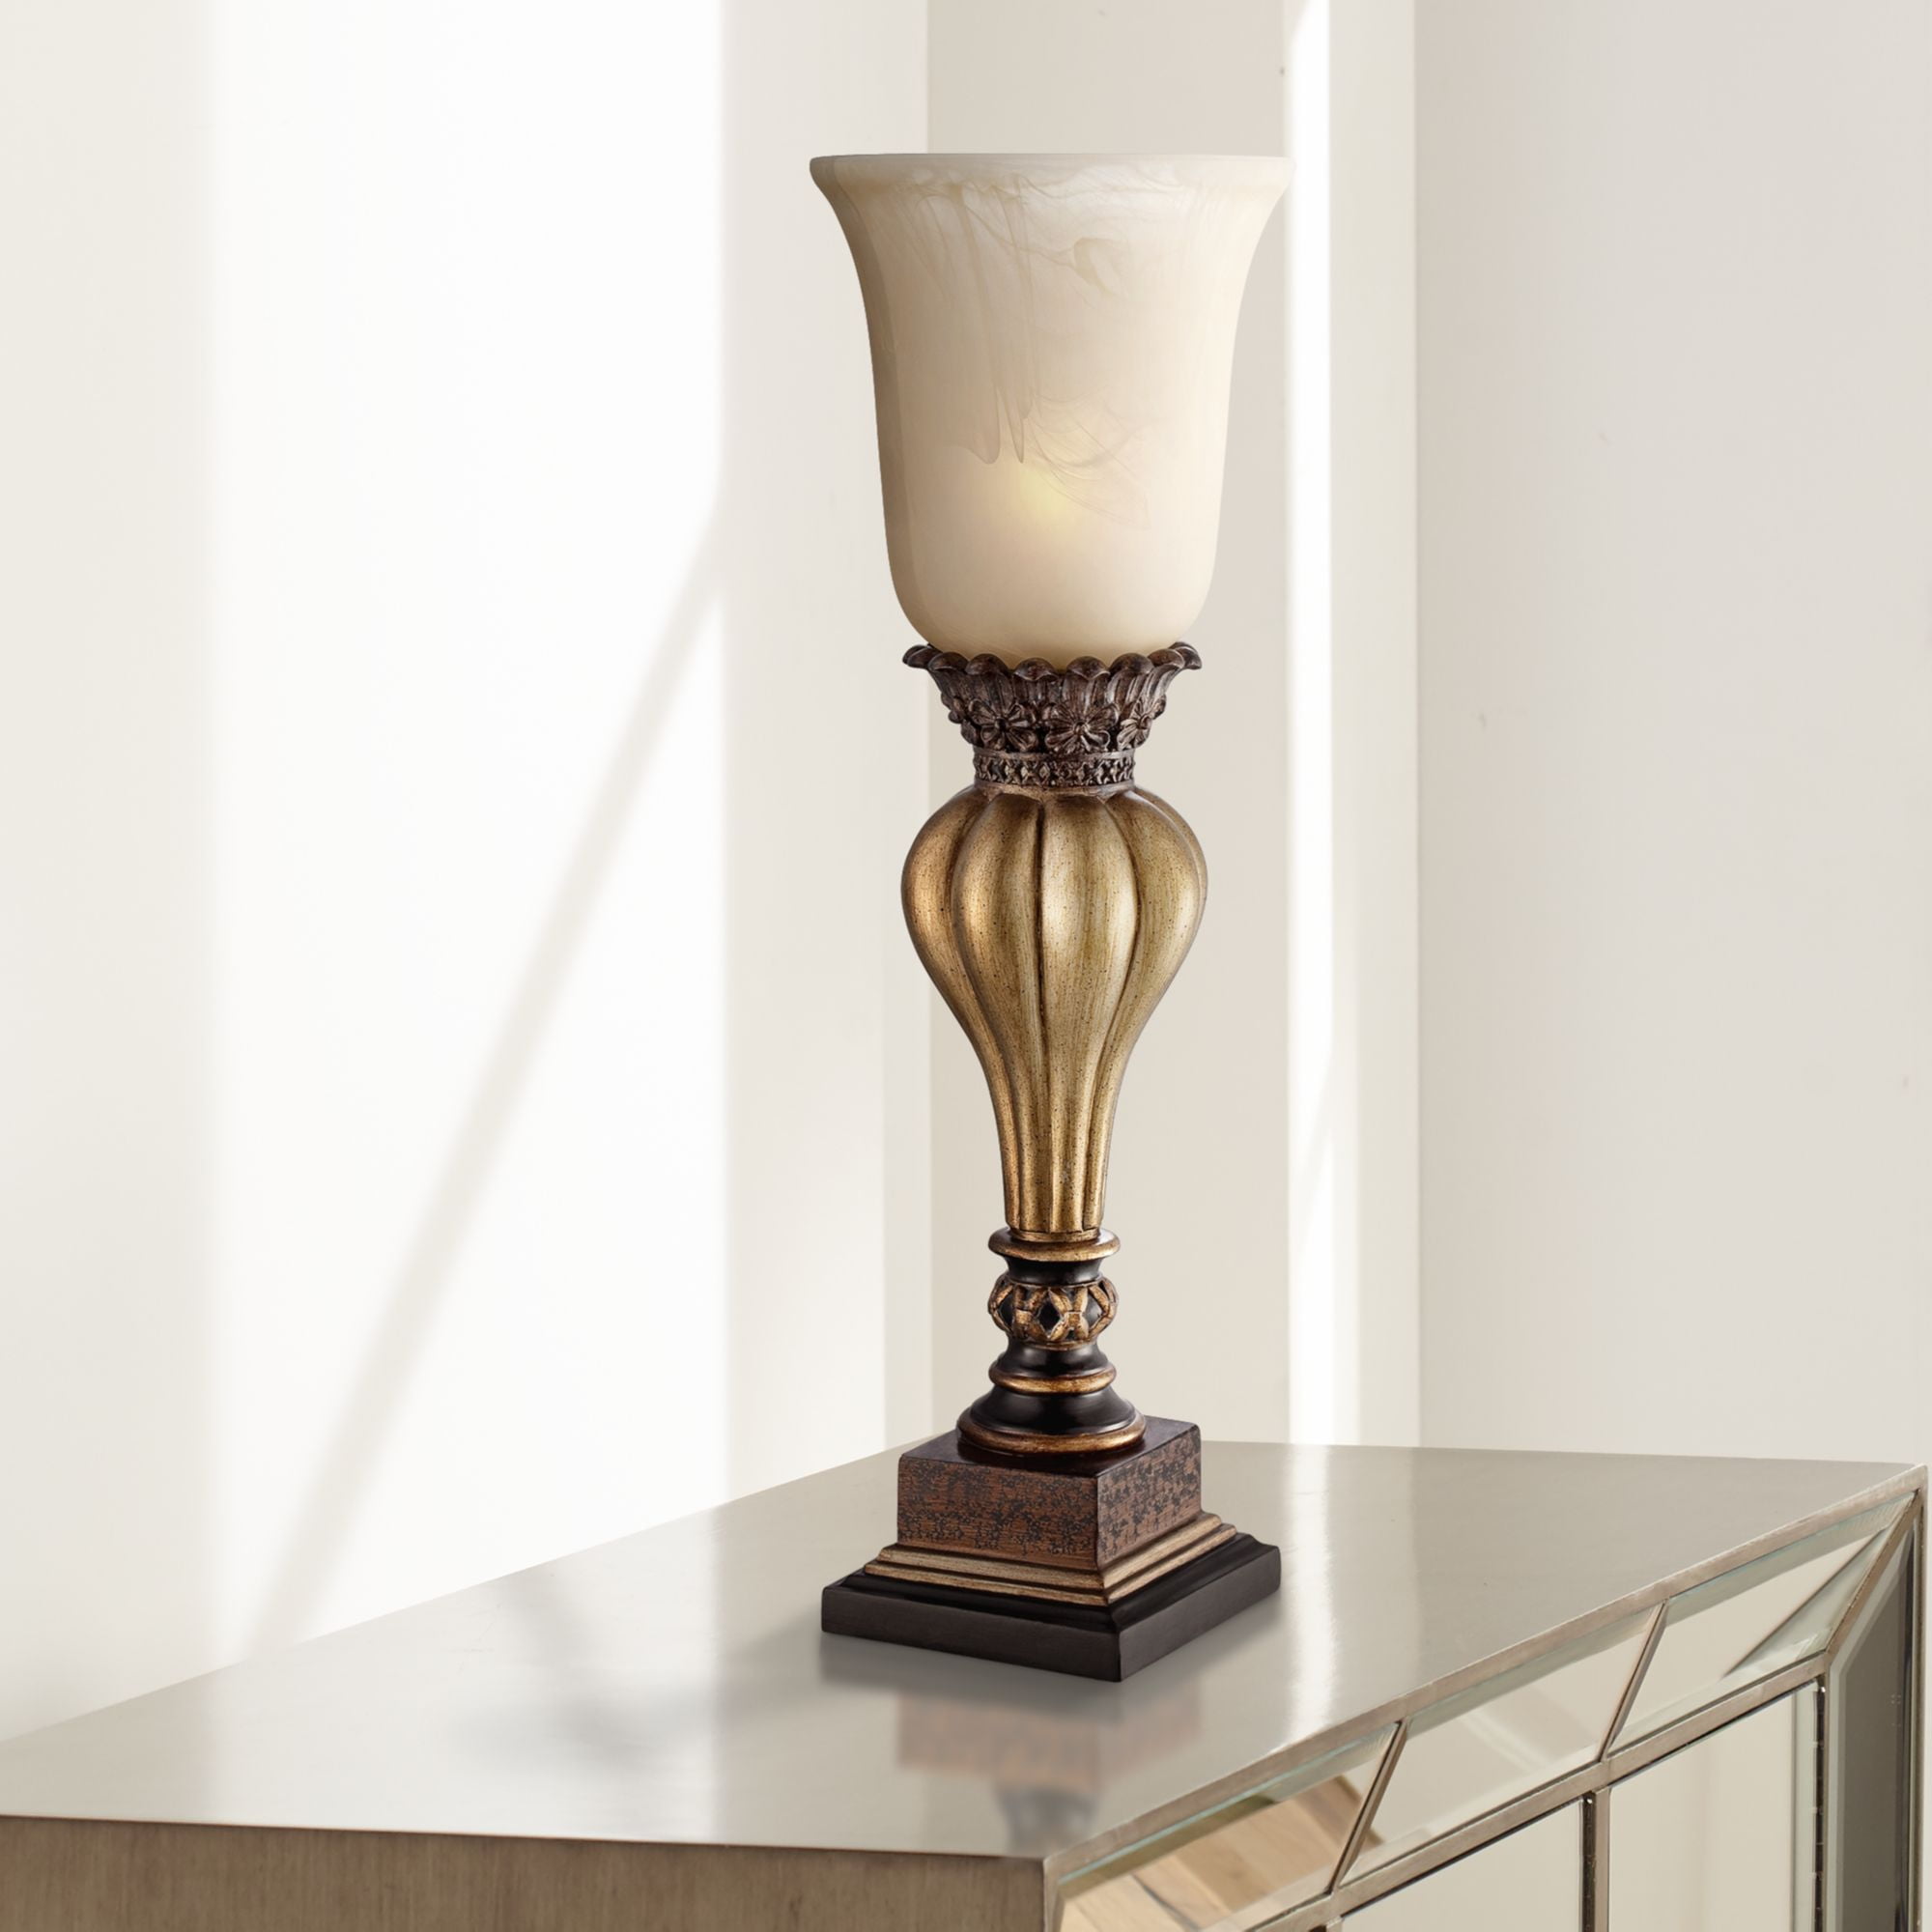 Regency Hill Traditional Uplight Table Lamp Florentine Bronze Fluted Column Alabaster Glass Shade for Living Room Family Bedroom